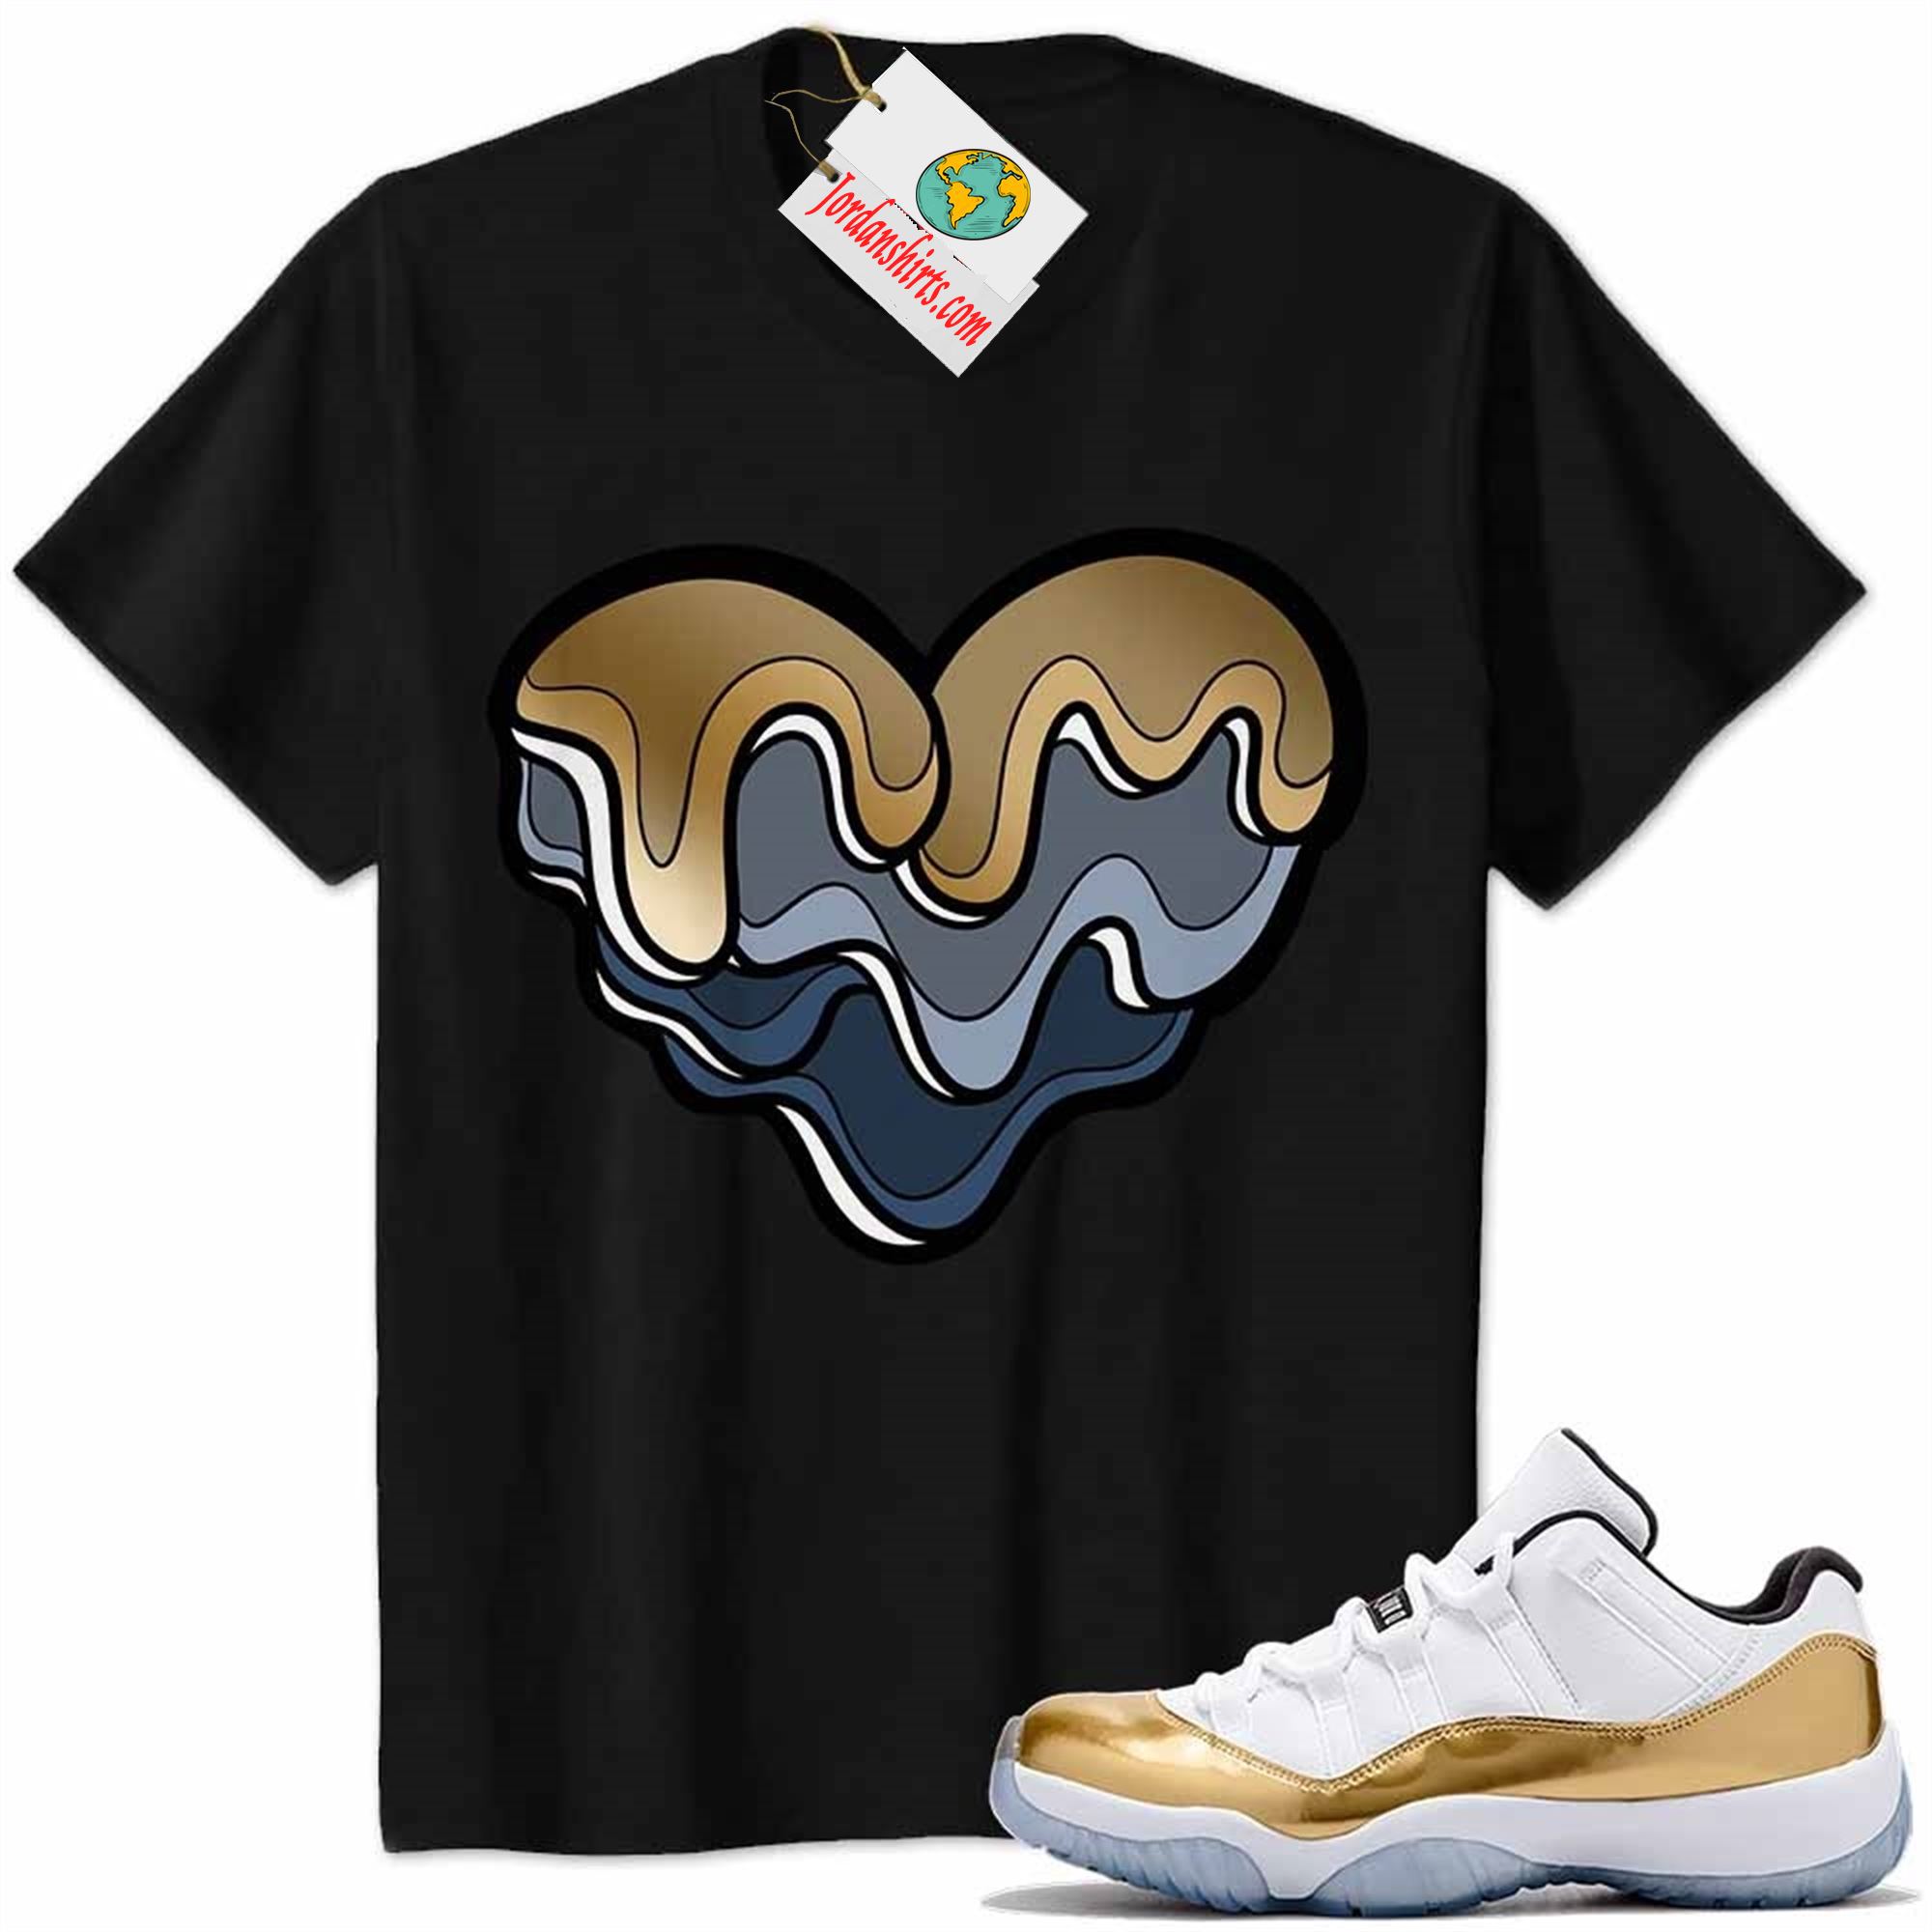 Jordan 11 Shirt, Melt Dripping Heart Black Air Jordan 11 Metallic Gold 11s Full Size Up To 5xl